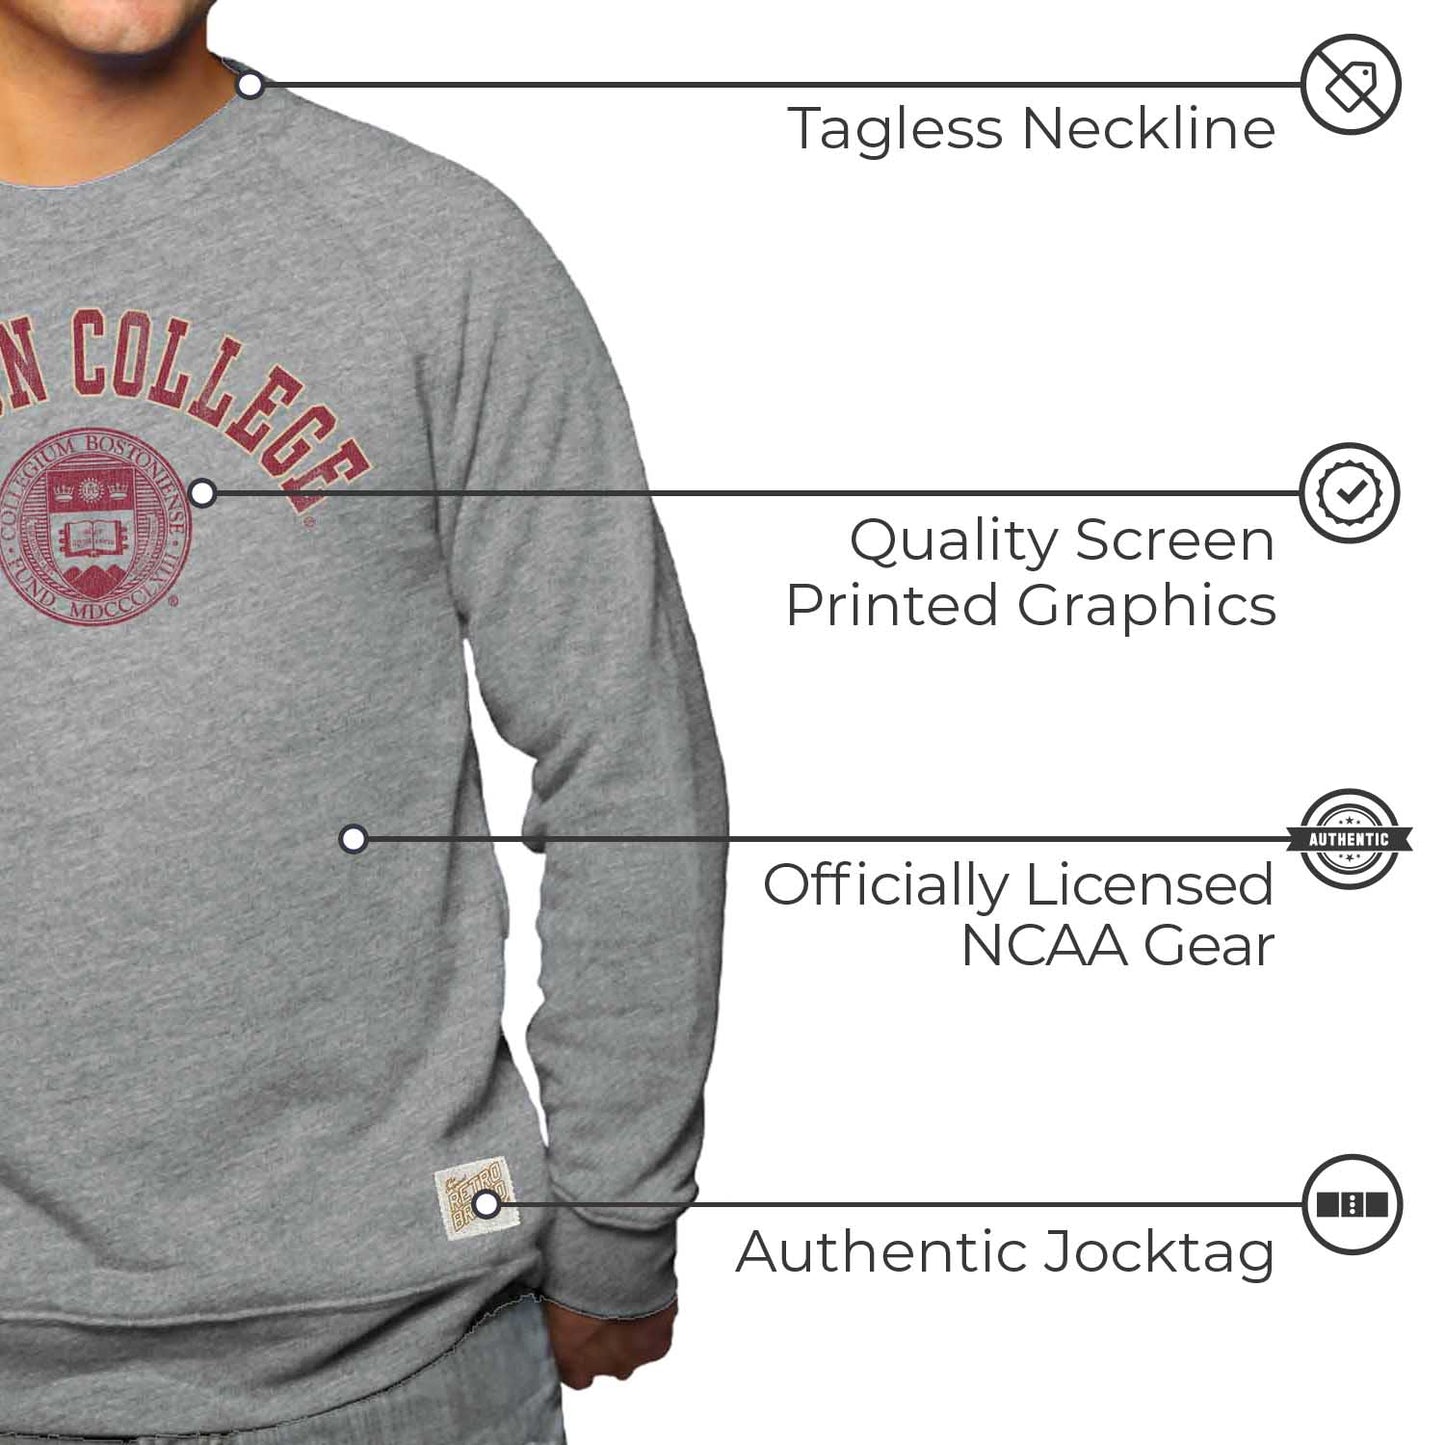 Boston College Eagles College Gray University Seal Crewneck Sweatshirt - Gray